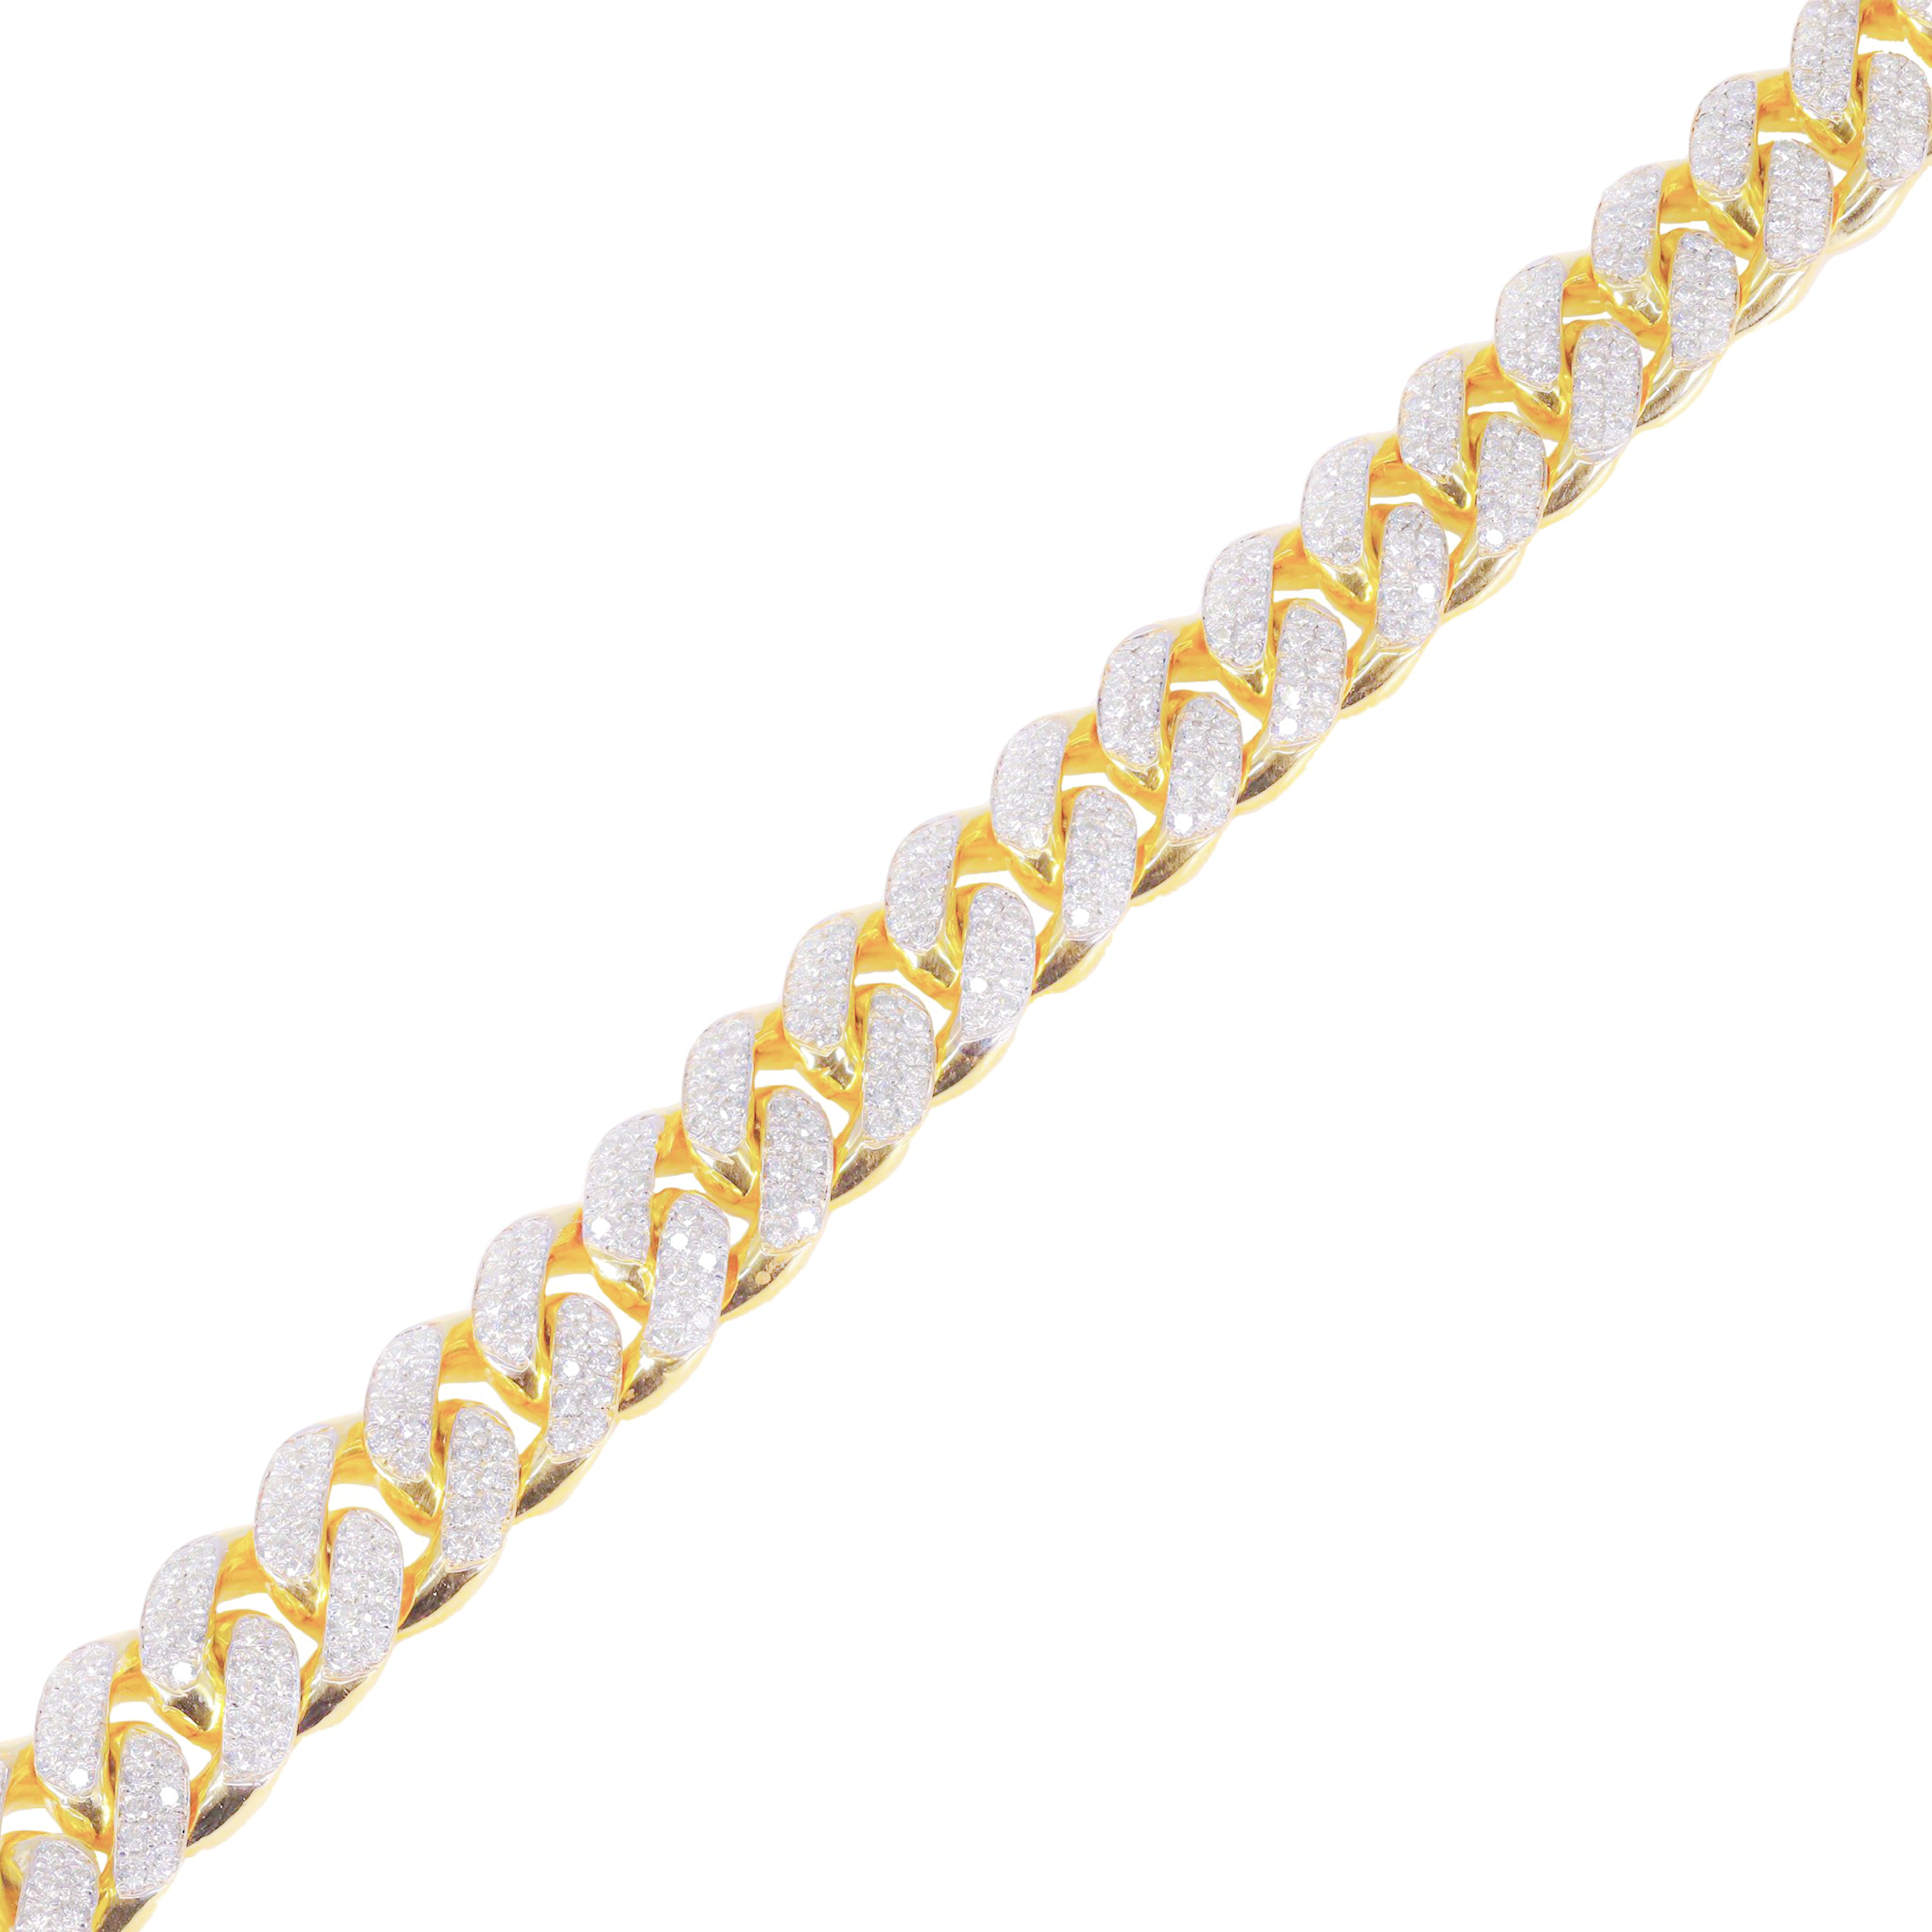 12.5mm Hand-Set Pave Cuban Link Diamond Bracelet